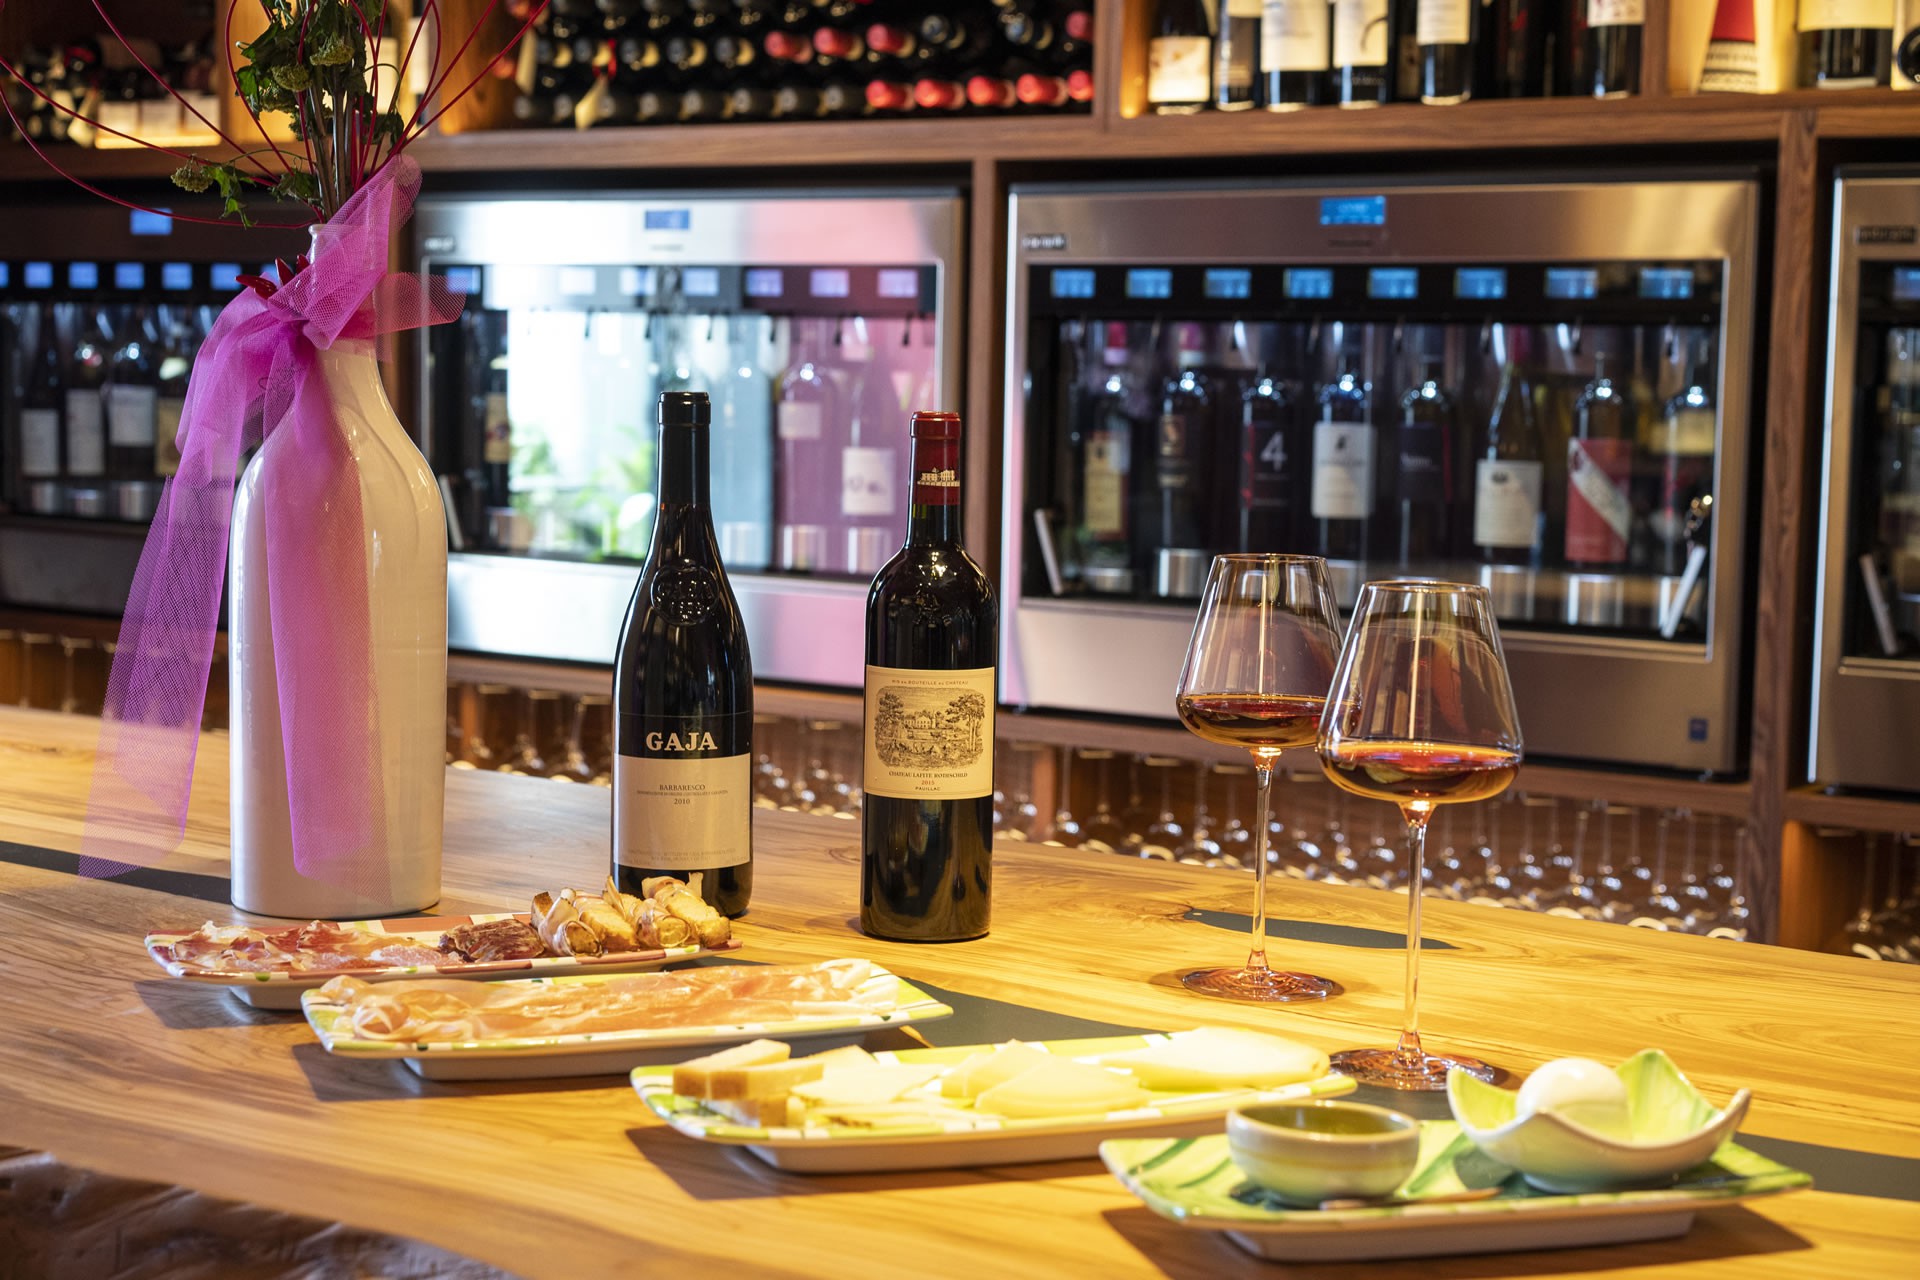 Piemonte Red Wines Online – Le Wine Tre Sorelle Room